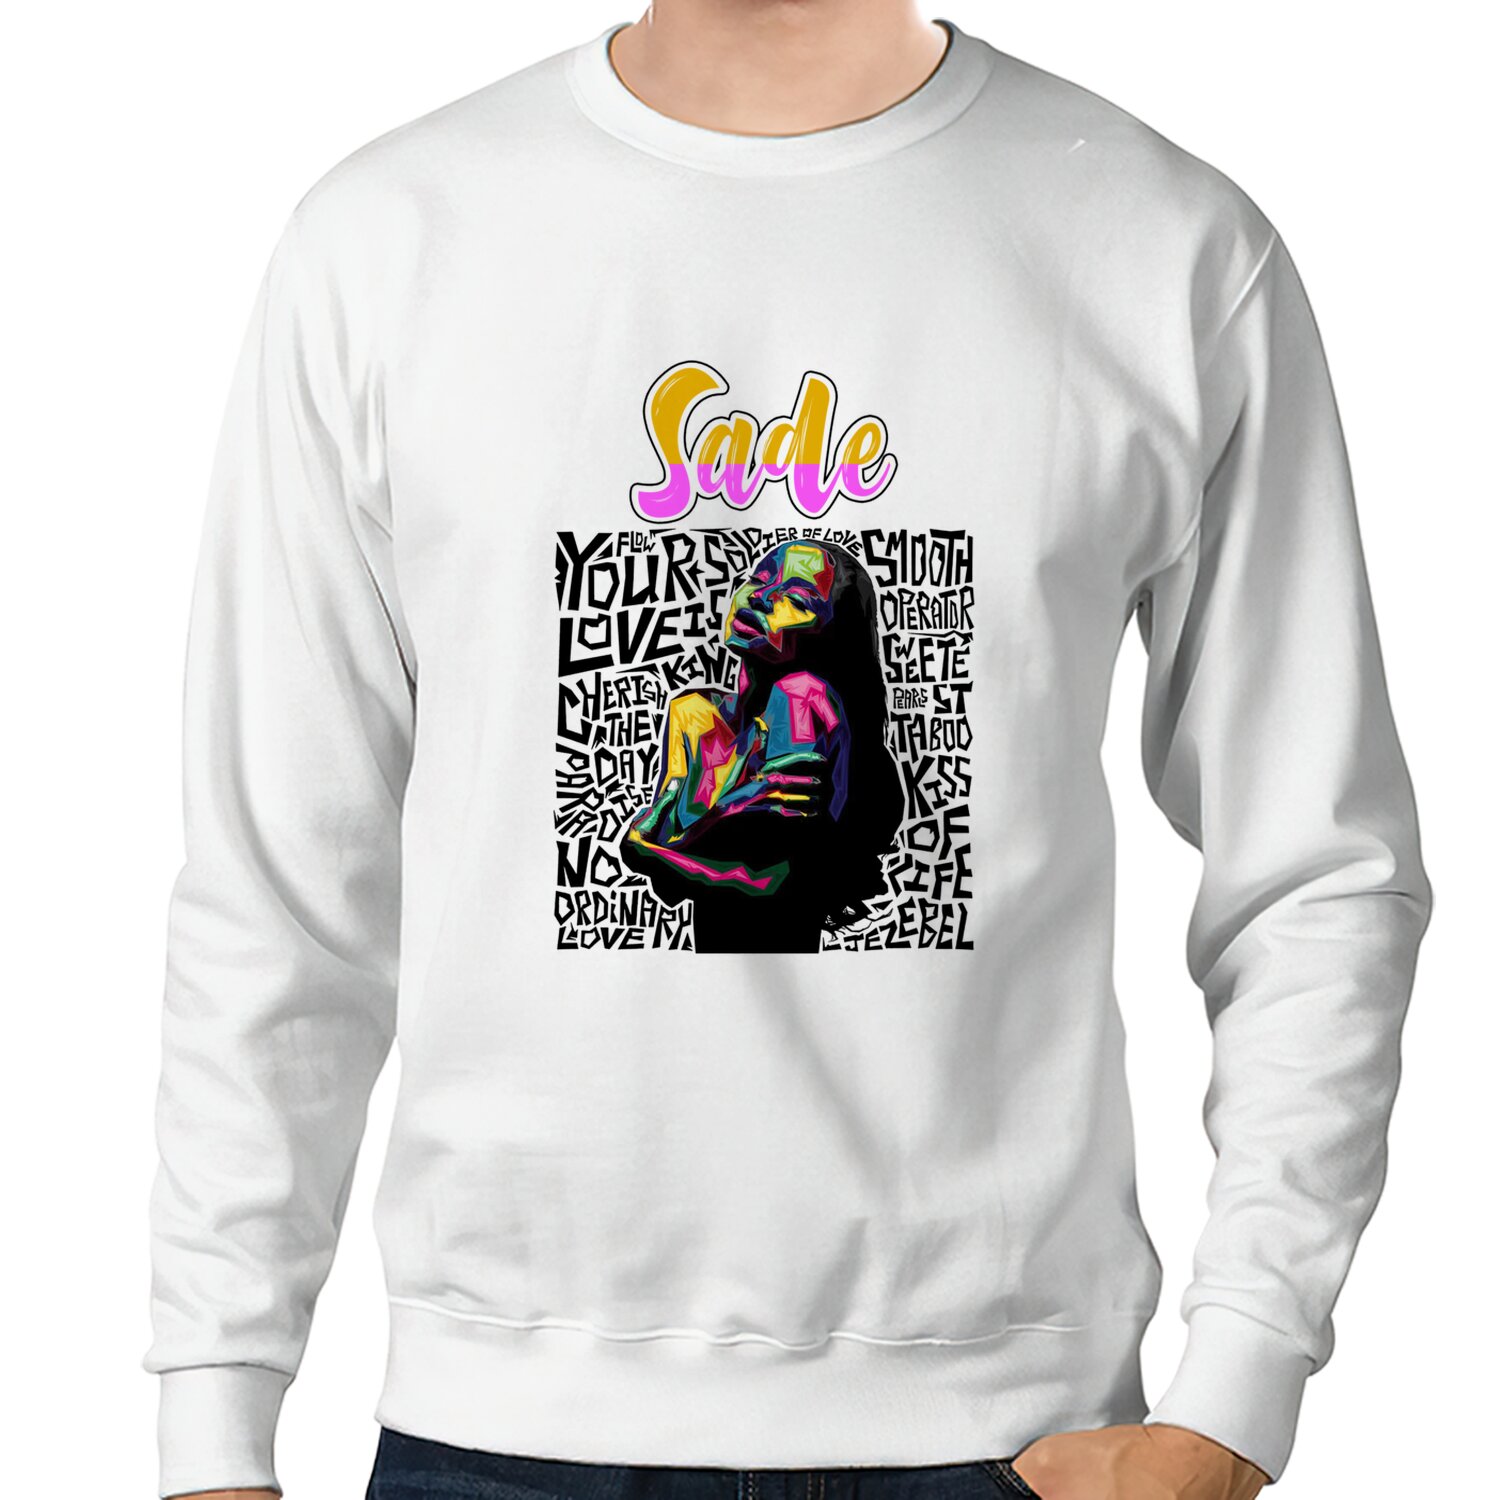 T-Shirt Sade Adu Smooth Operator No Ordinary Your Love is King Retro Vintage 80s Sade in Denim T-Shirt Music Shirt Sade Singer Shirt